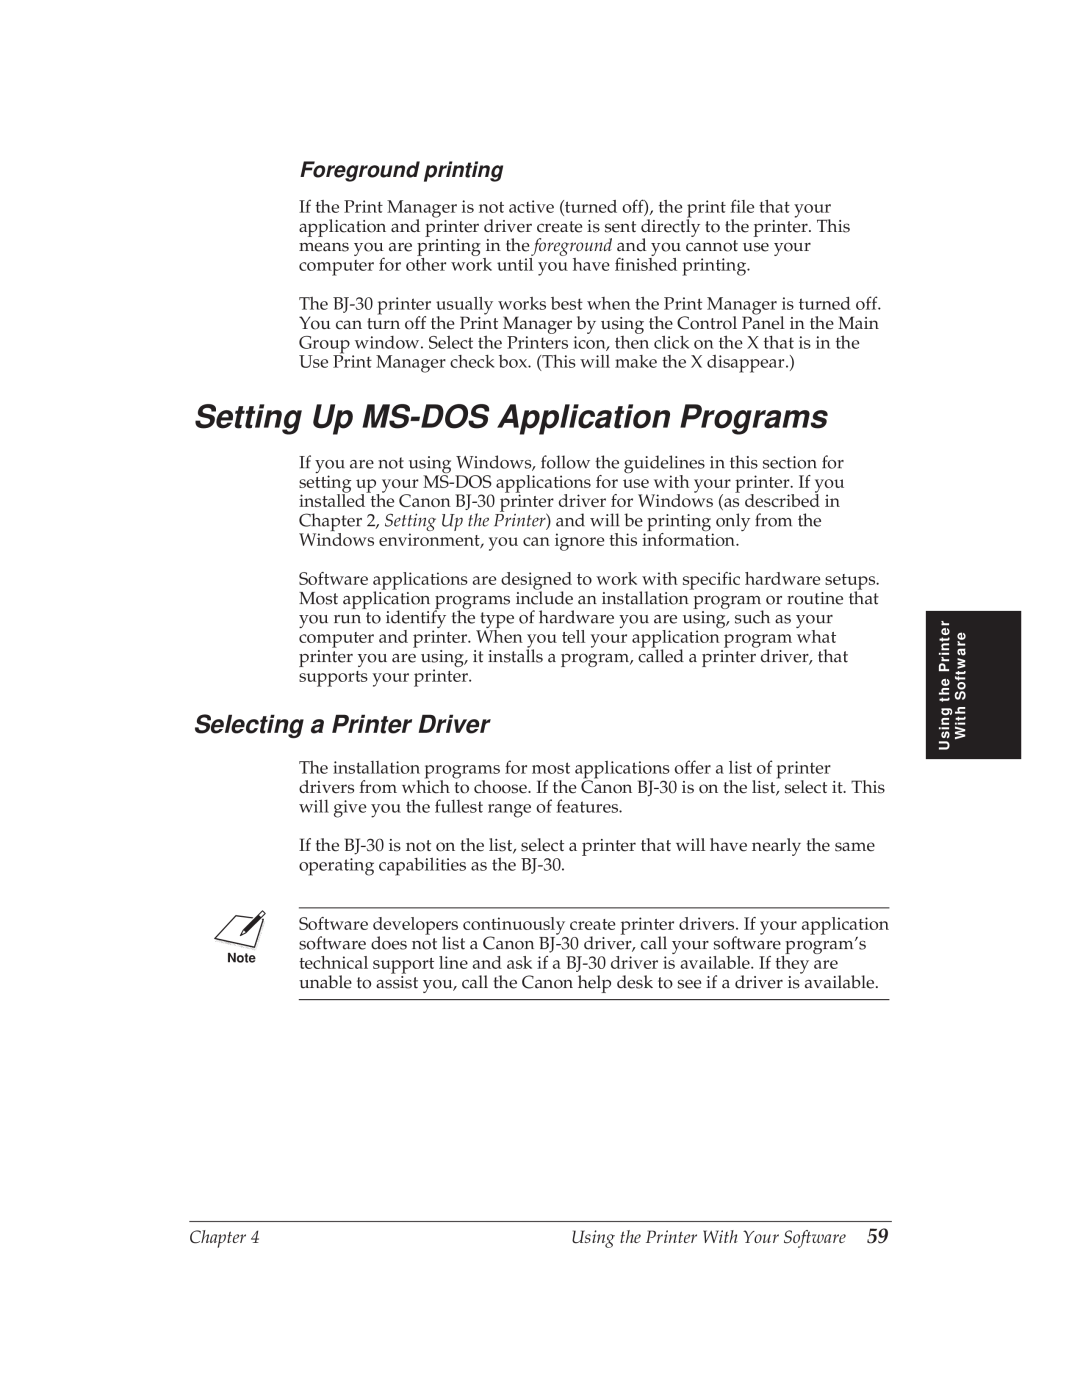 Canon BJ-30 manual Setting Up MS-DOS Application Programs, Selecting a Printer Driver, Foreground printing 